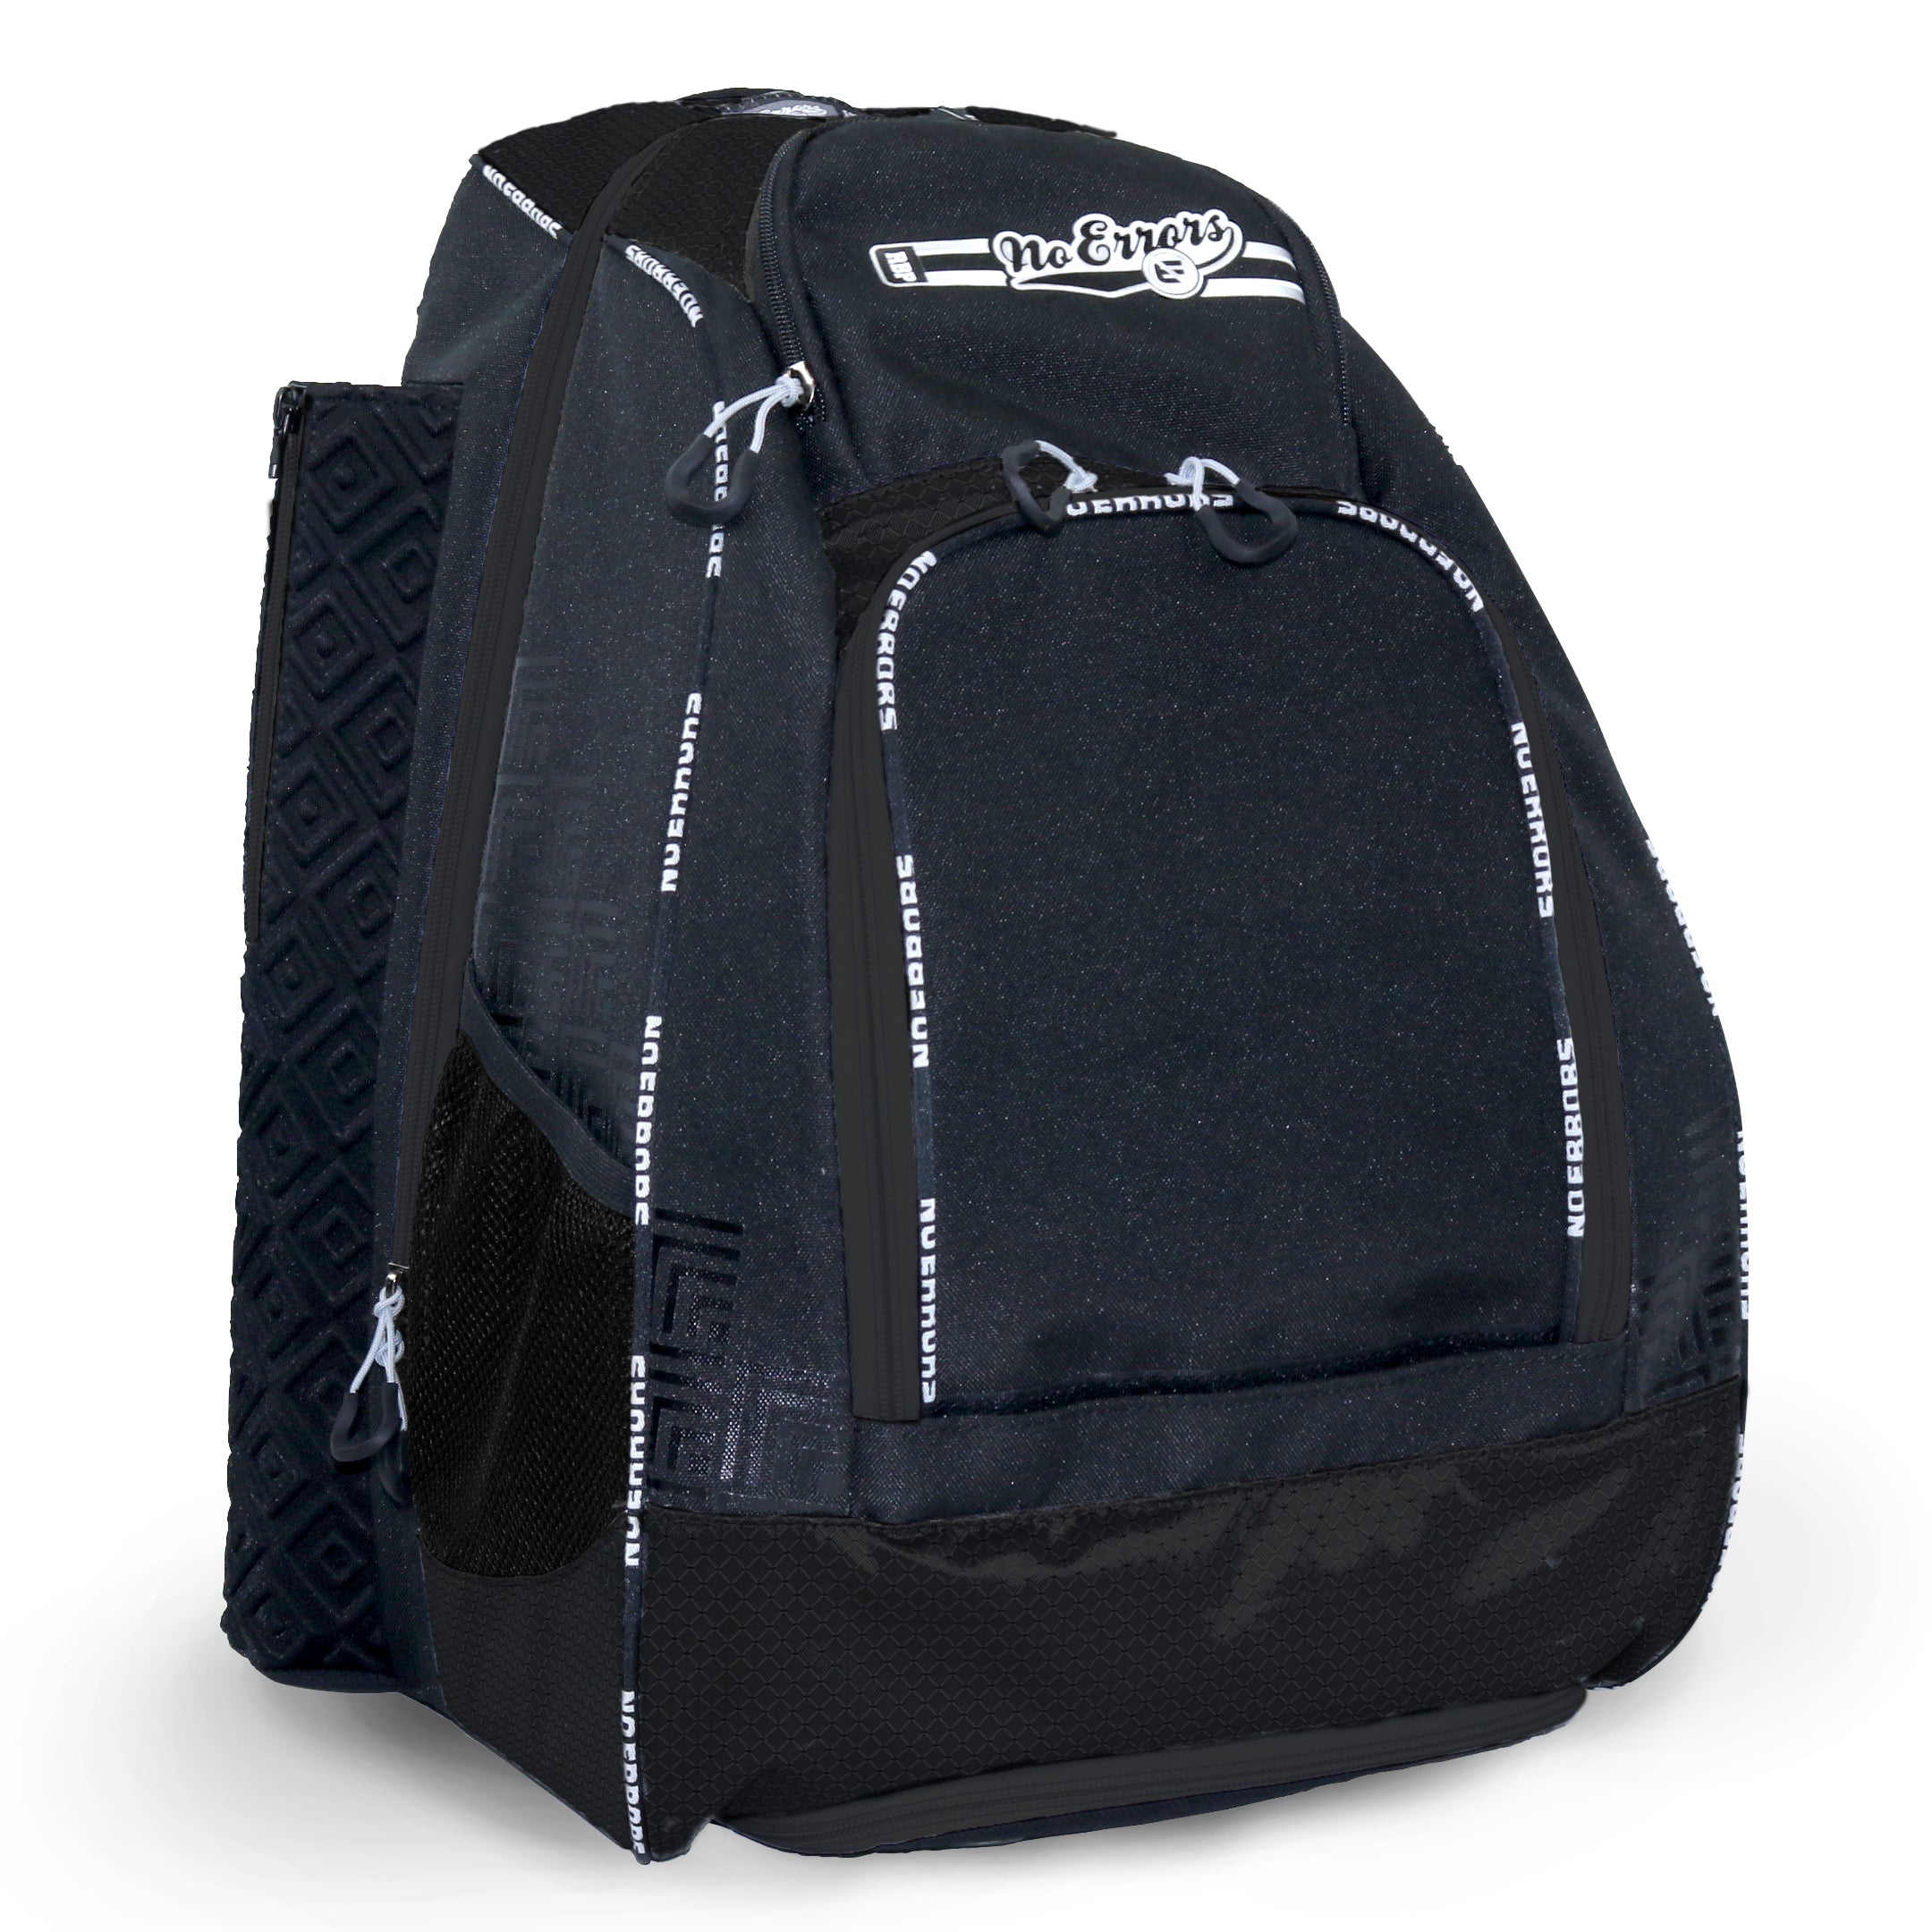 RBP Backpack Bag